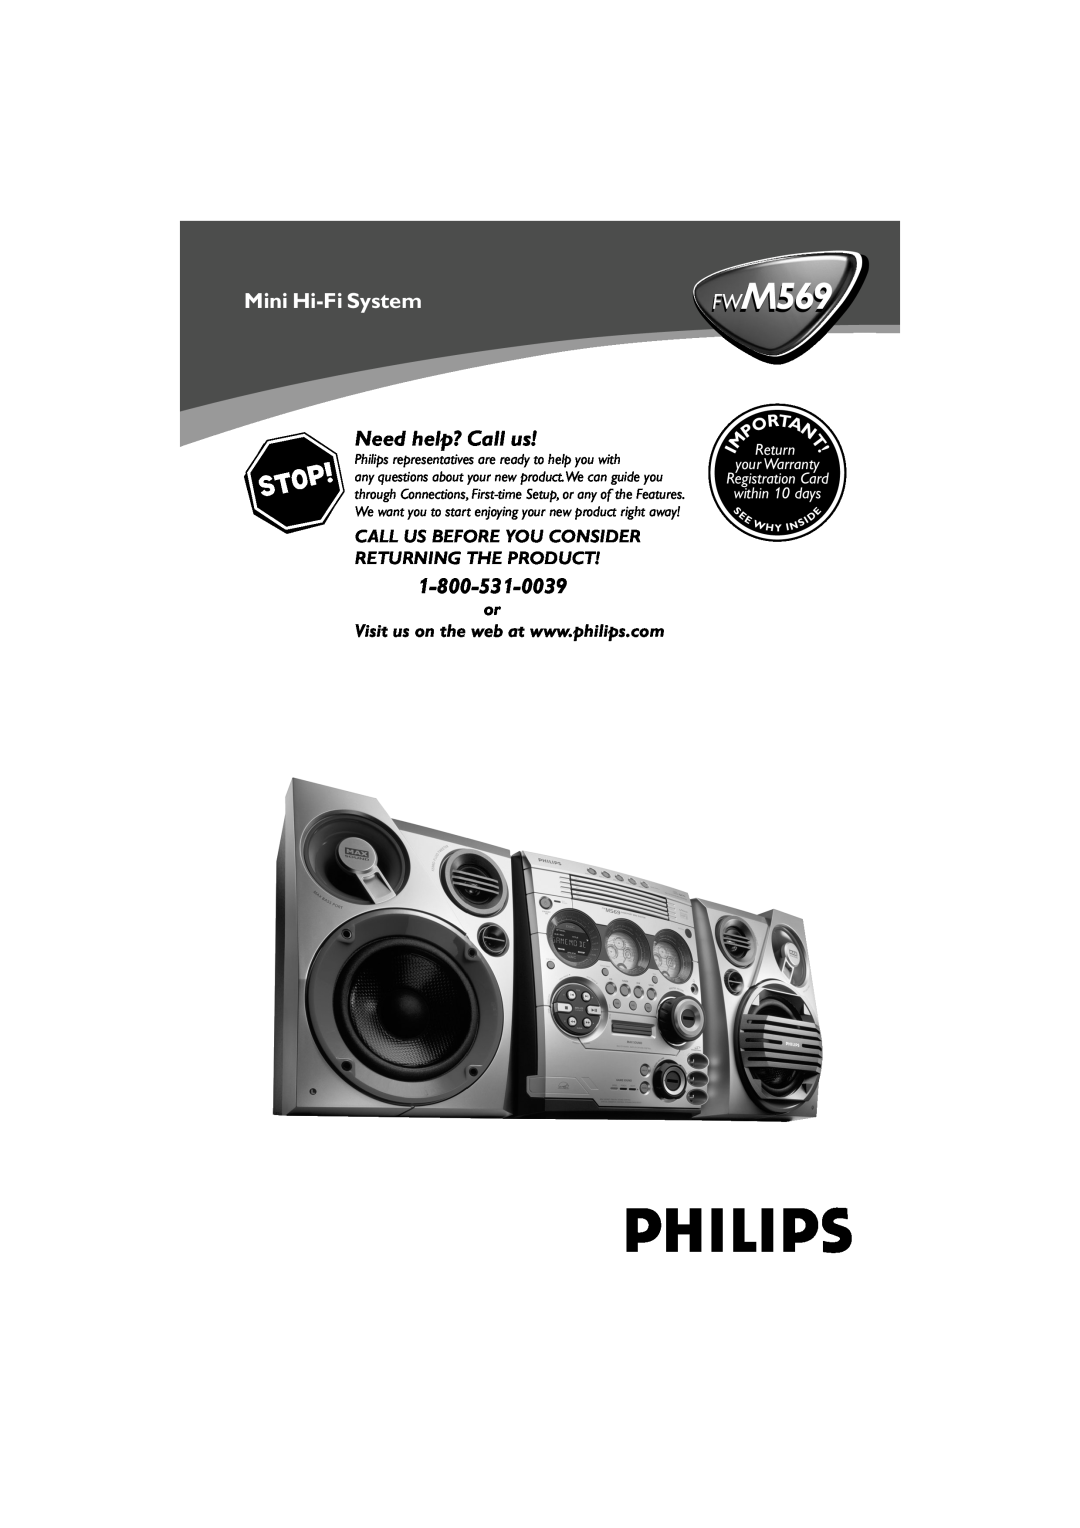 Philips FWM569/37B warranty Mini Hi-FiSystem, Need help? Call us, your Warranty Registration Card within 10 days, Return 